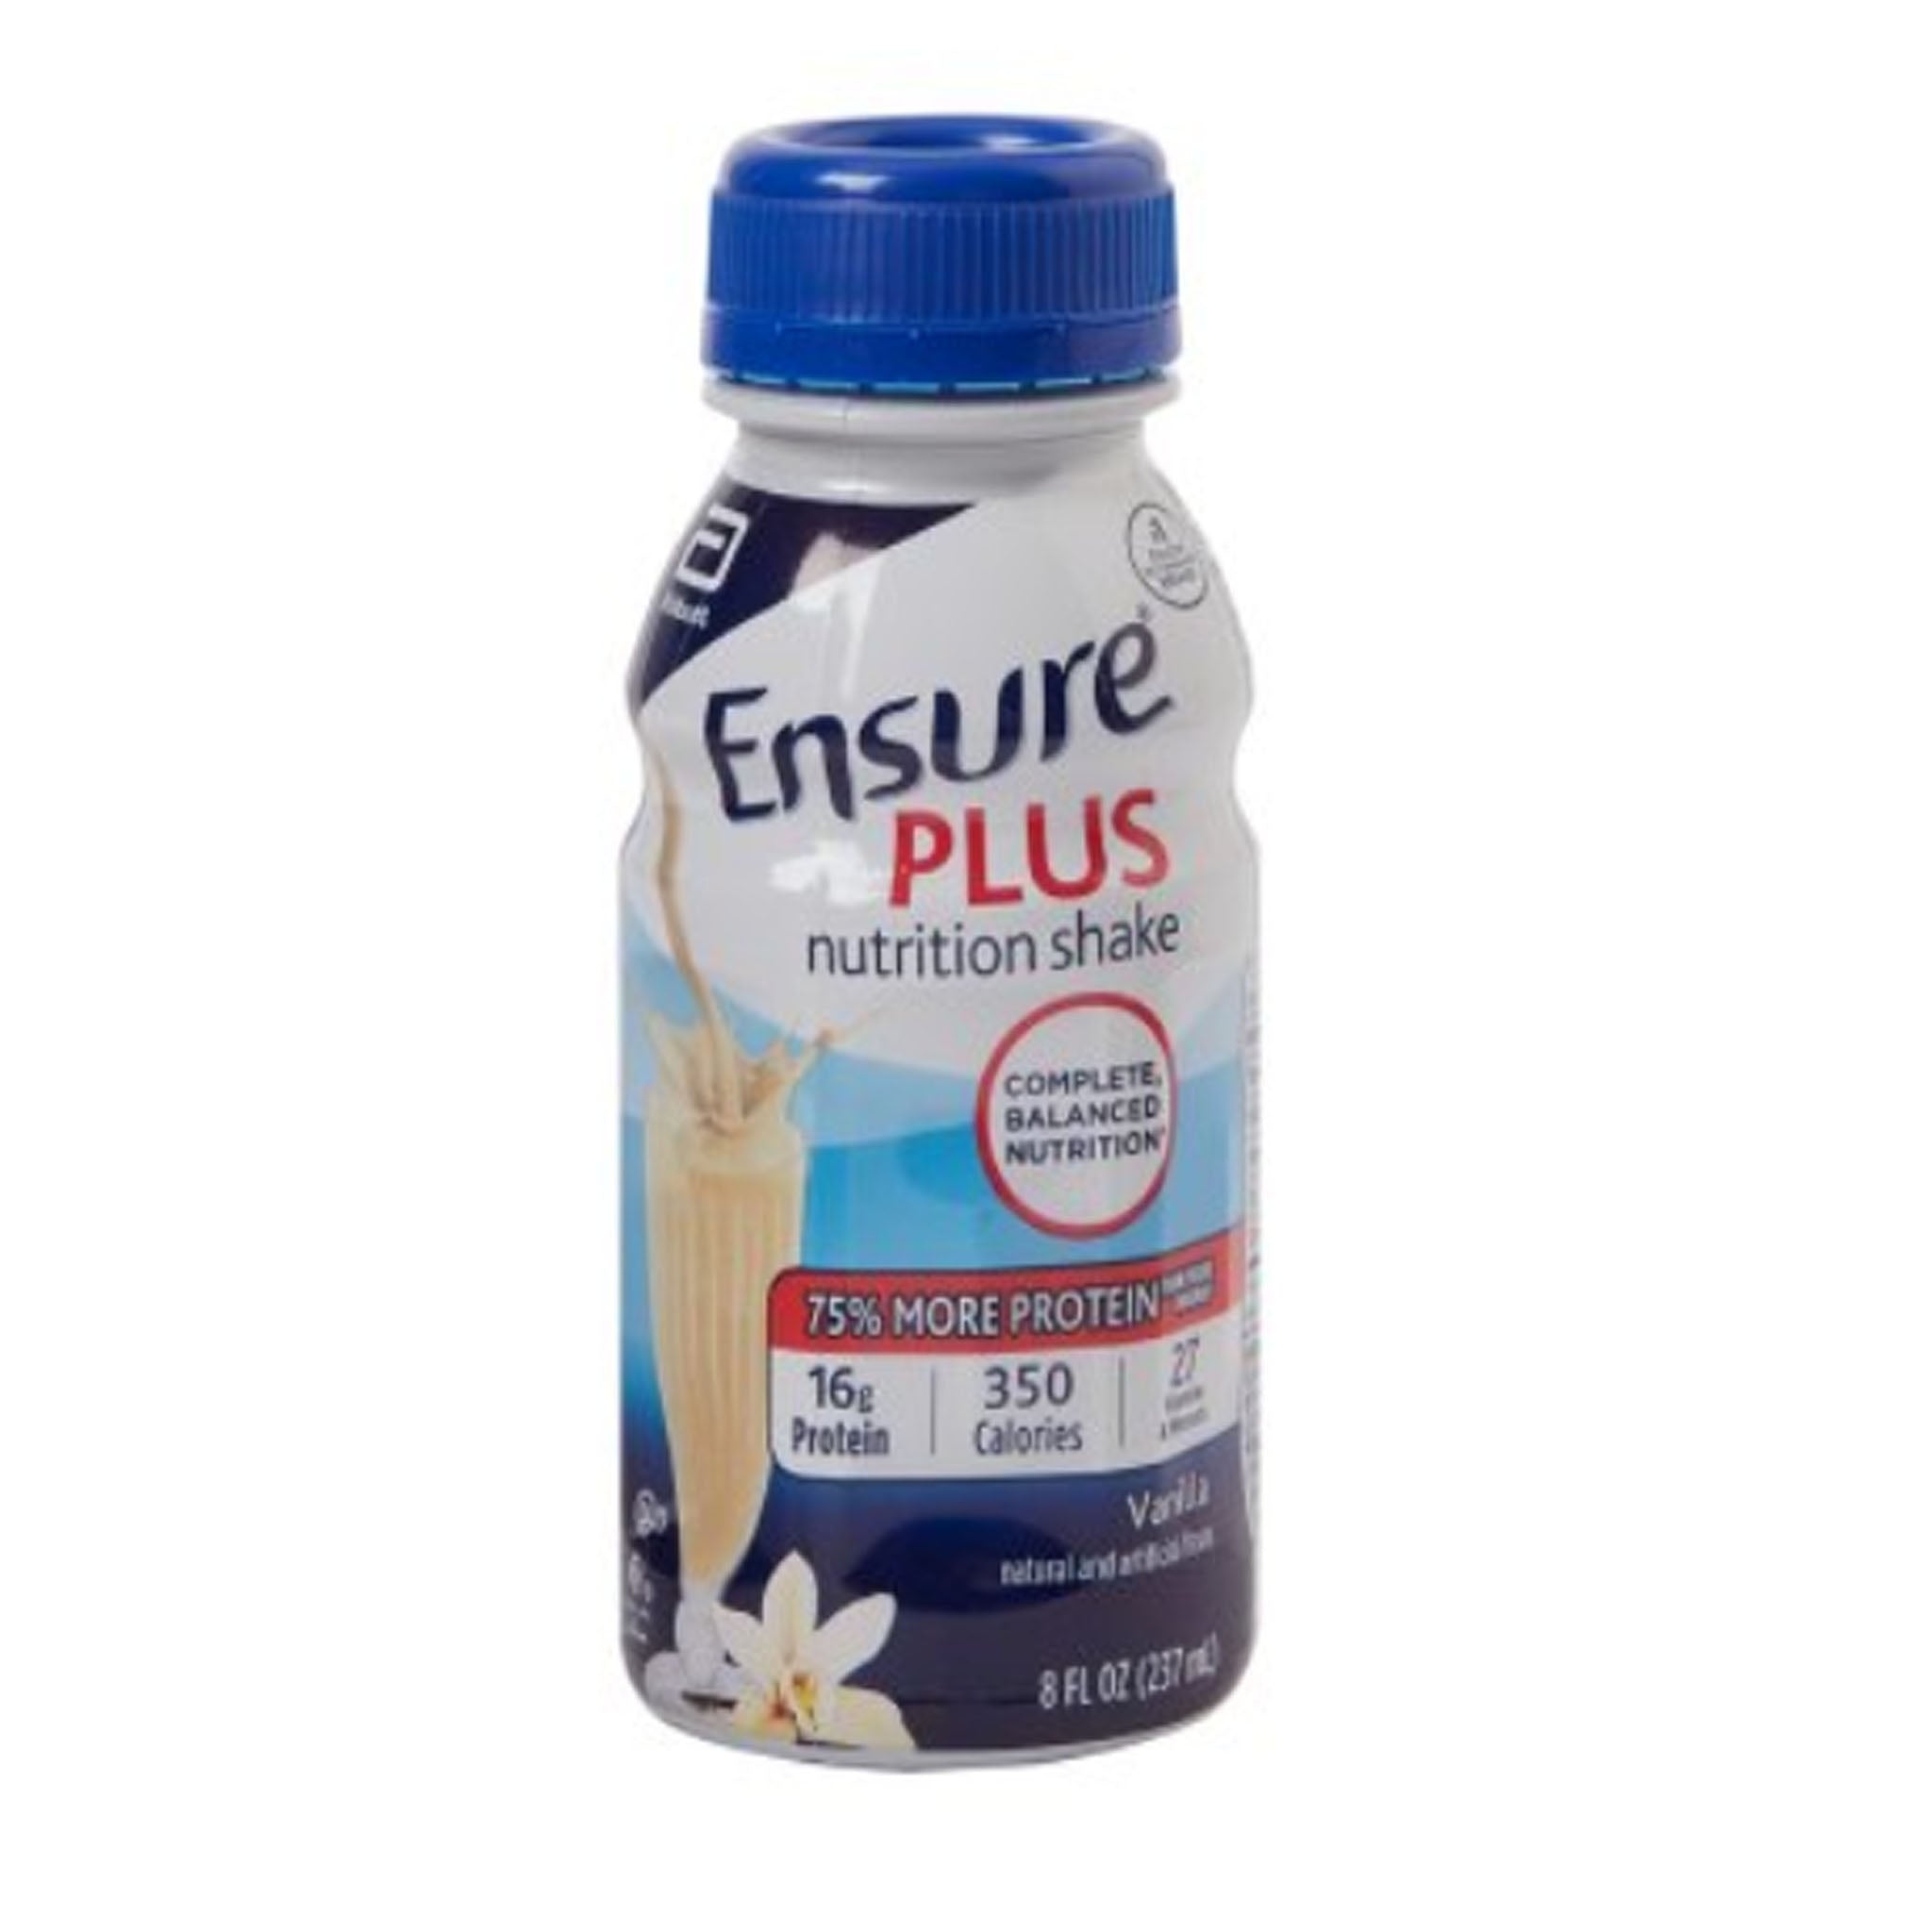 Ensure Plus Bottle 8 oz. Nutritional Shake